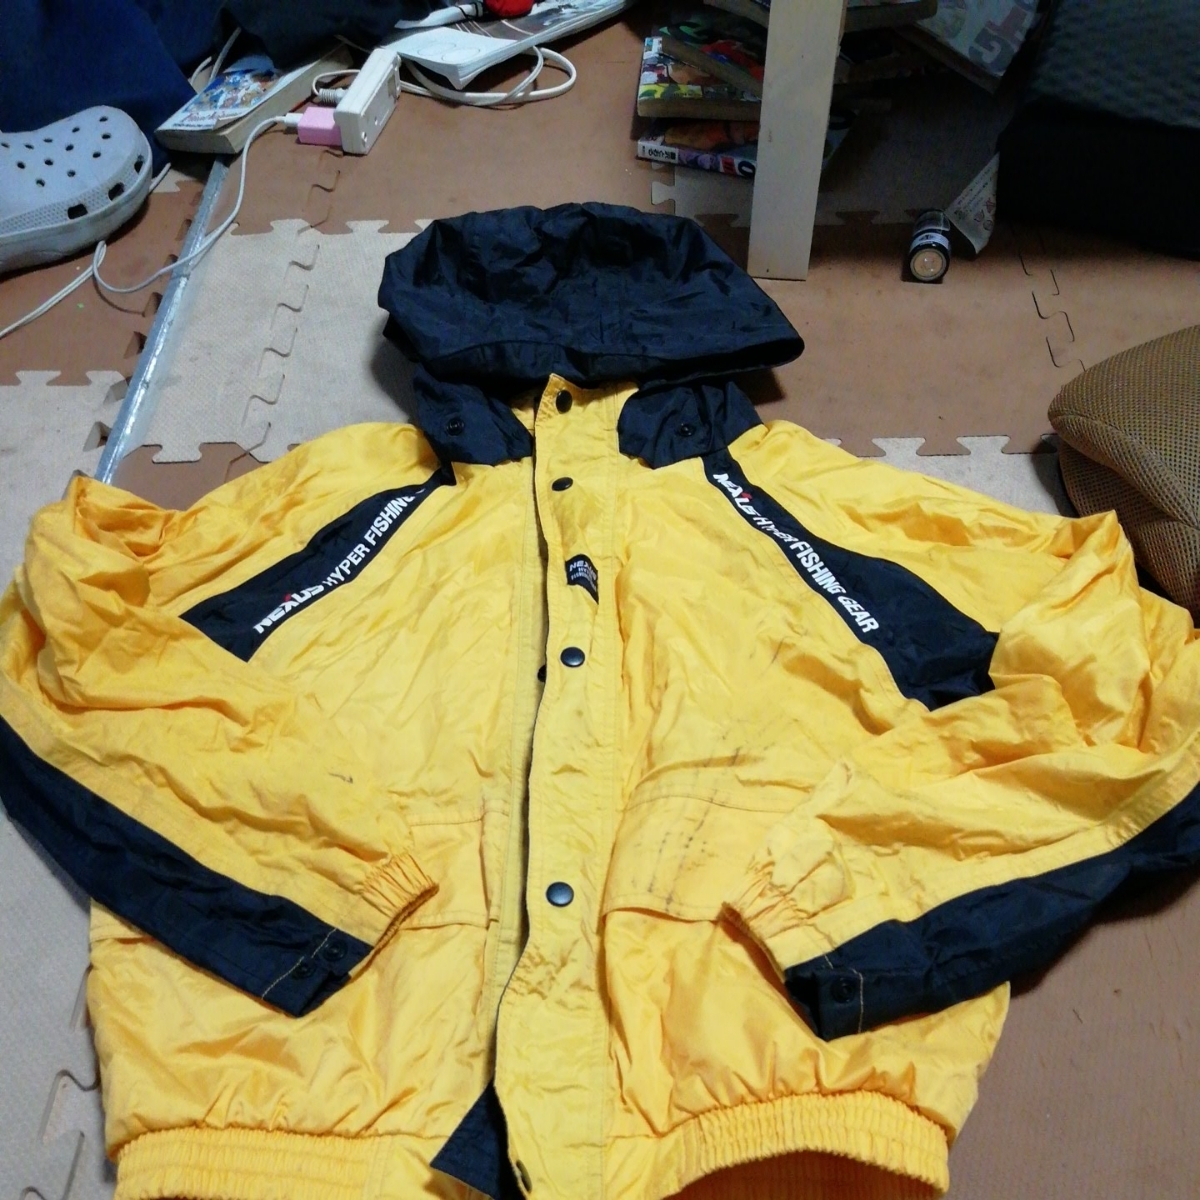 Shimano, Nexus all weather jacket size L hyper fishing gear : Real